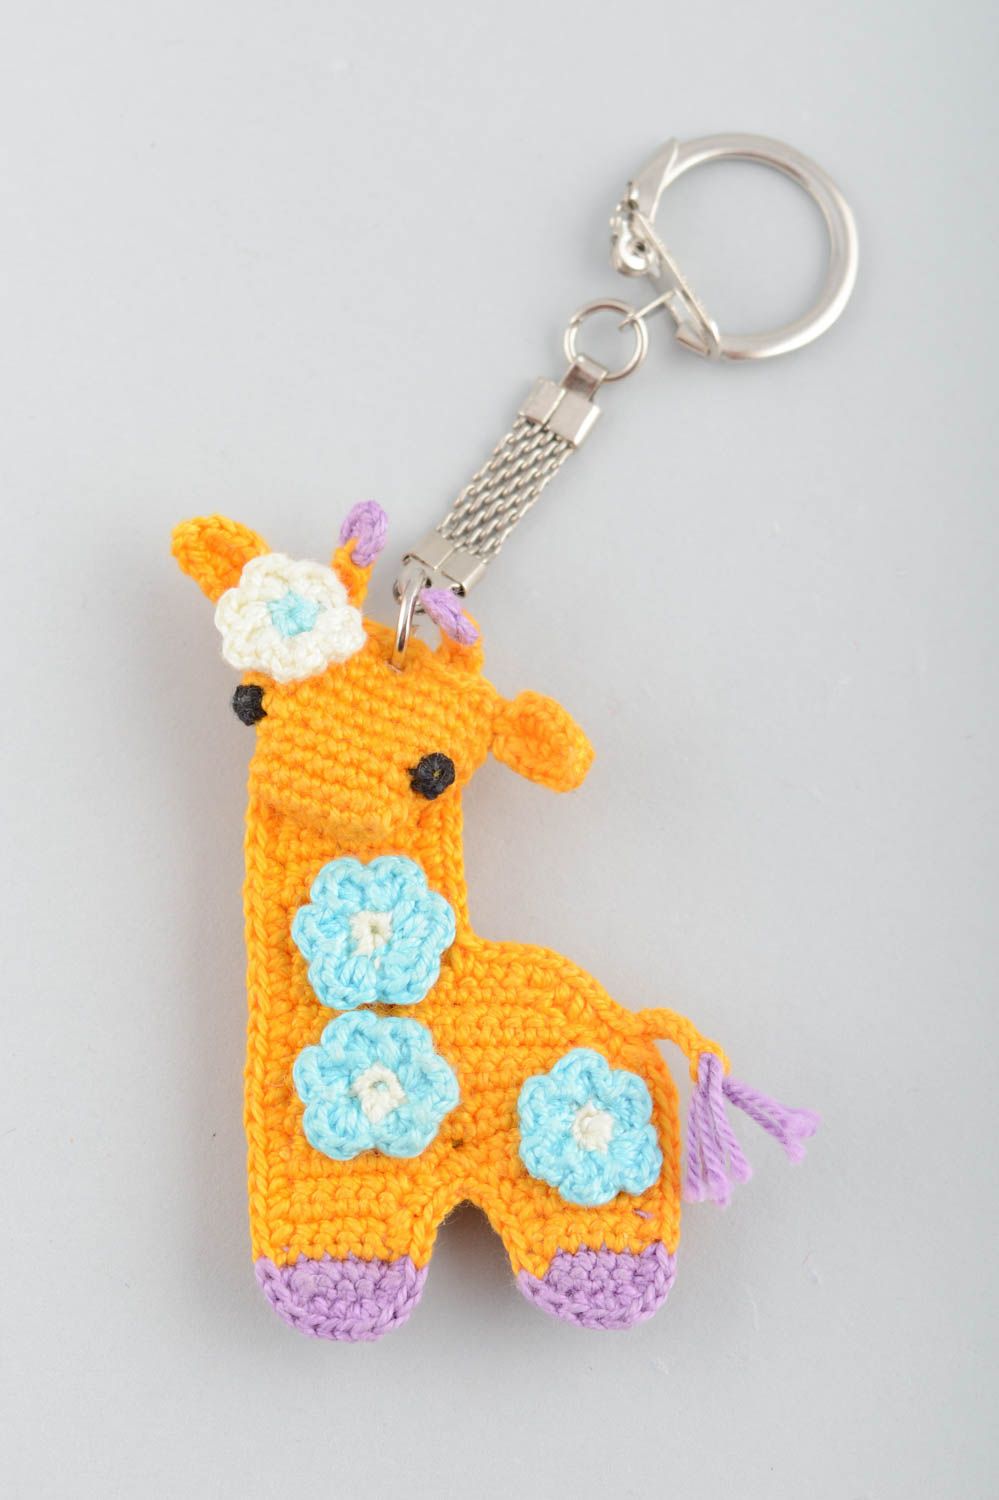 Keychain with soft giraffe toy cute little yellow crocheted handmade accessory photo 5